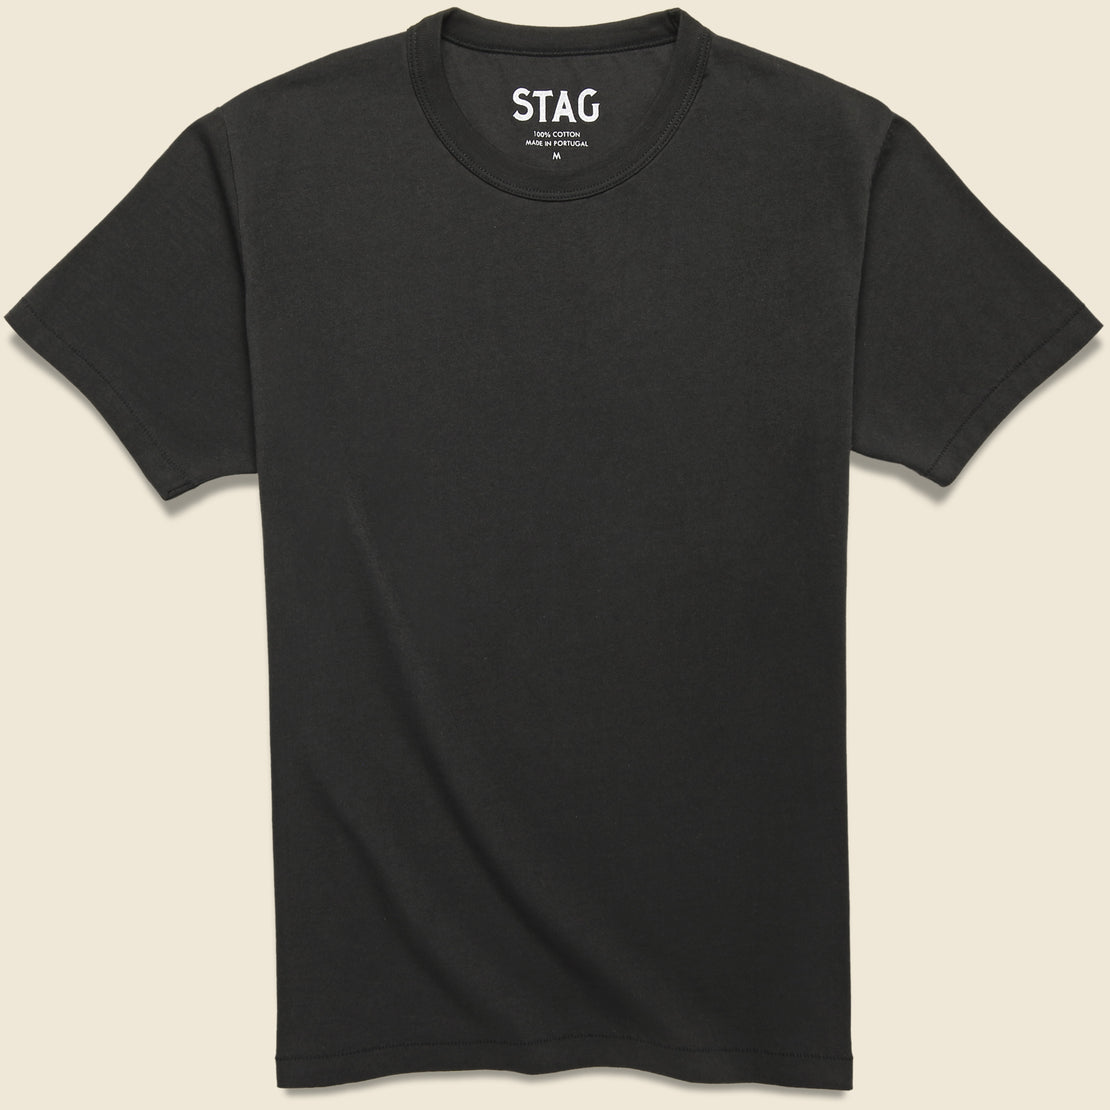 STAG STAG Tee - Black